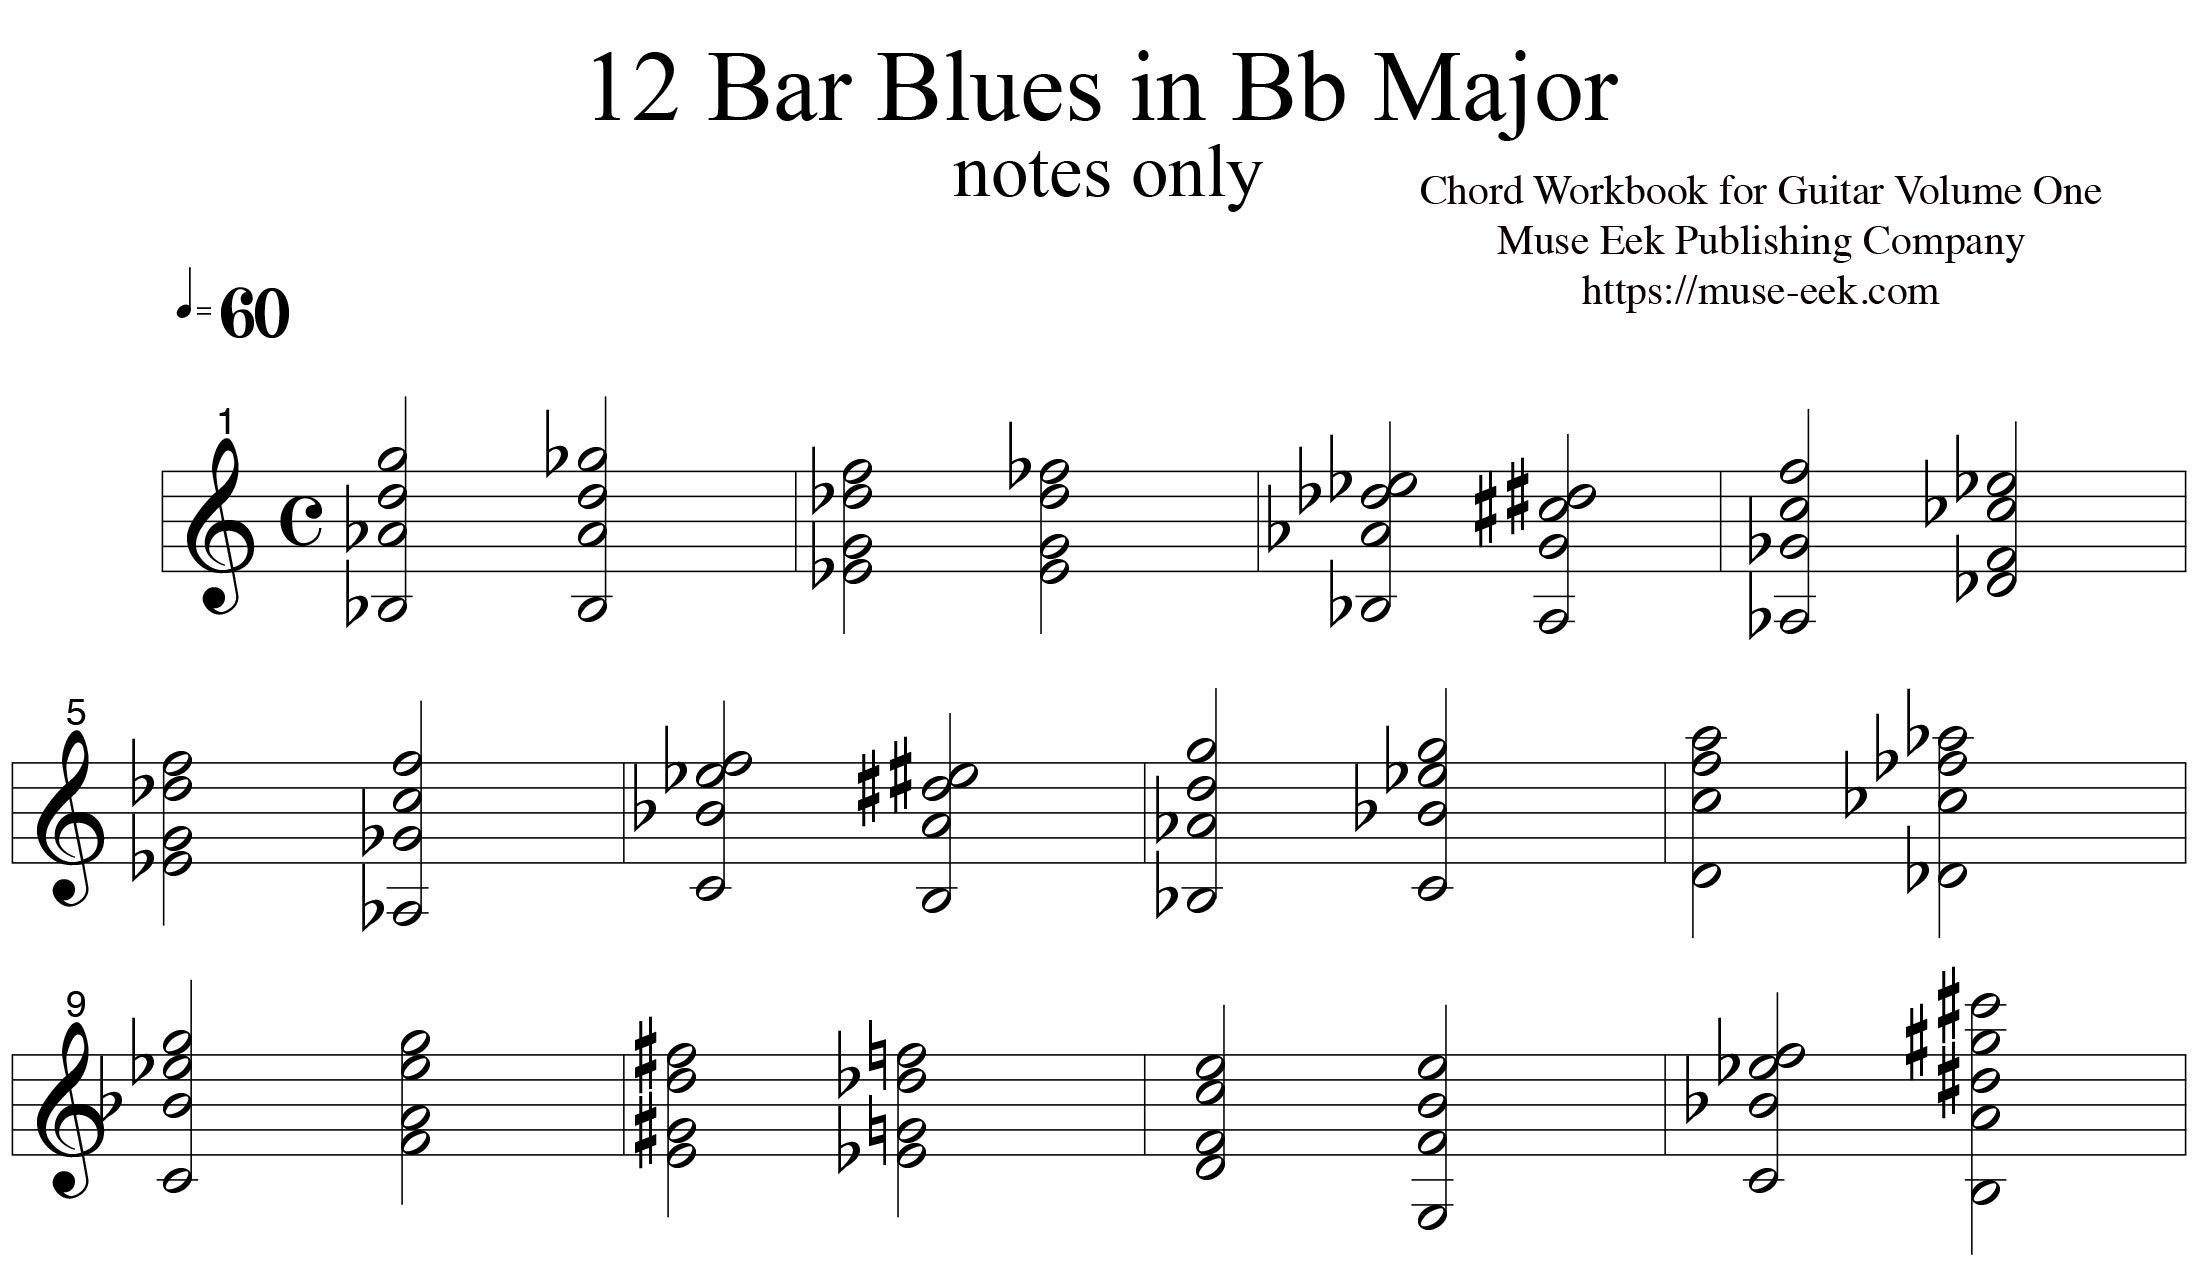 Bb-Blues-Progression-Notes-Chord-Workbook-for-Guitar-V1-Bruce-Arnold-muse-eek